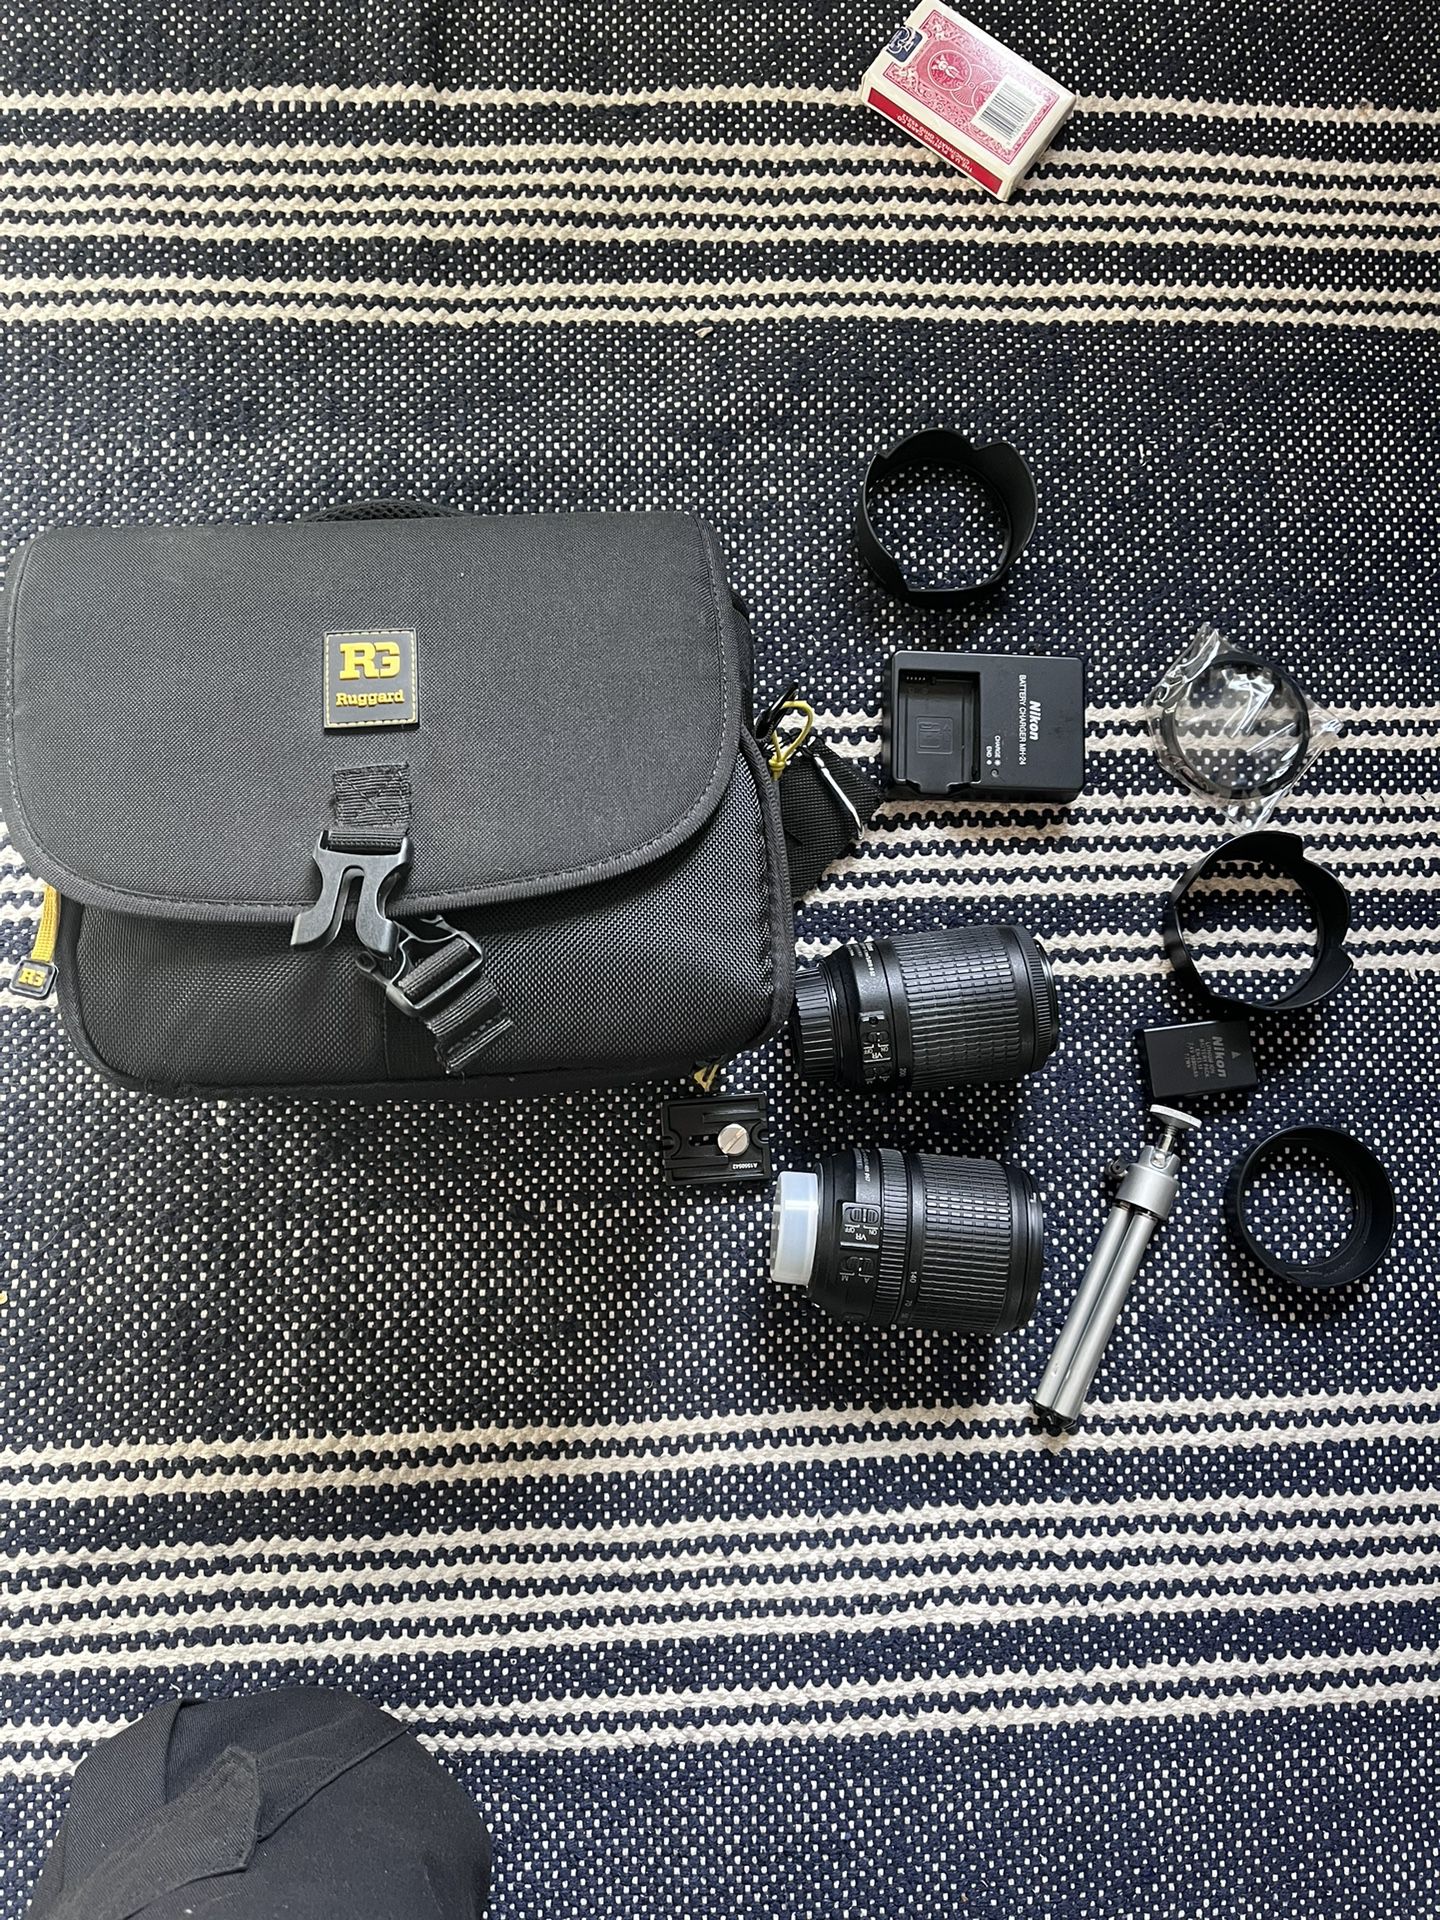 Nikon Camera Equipment